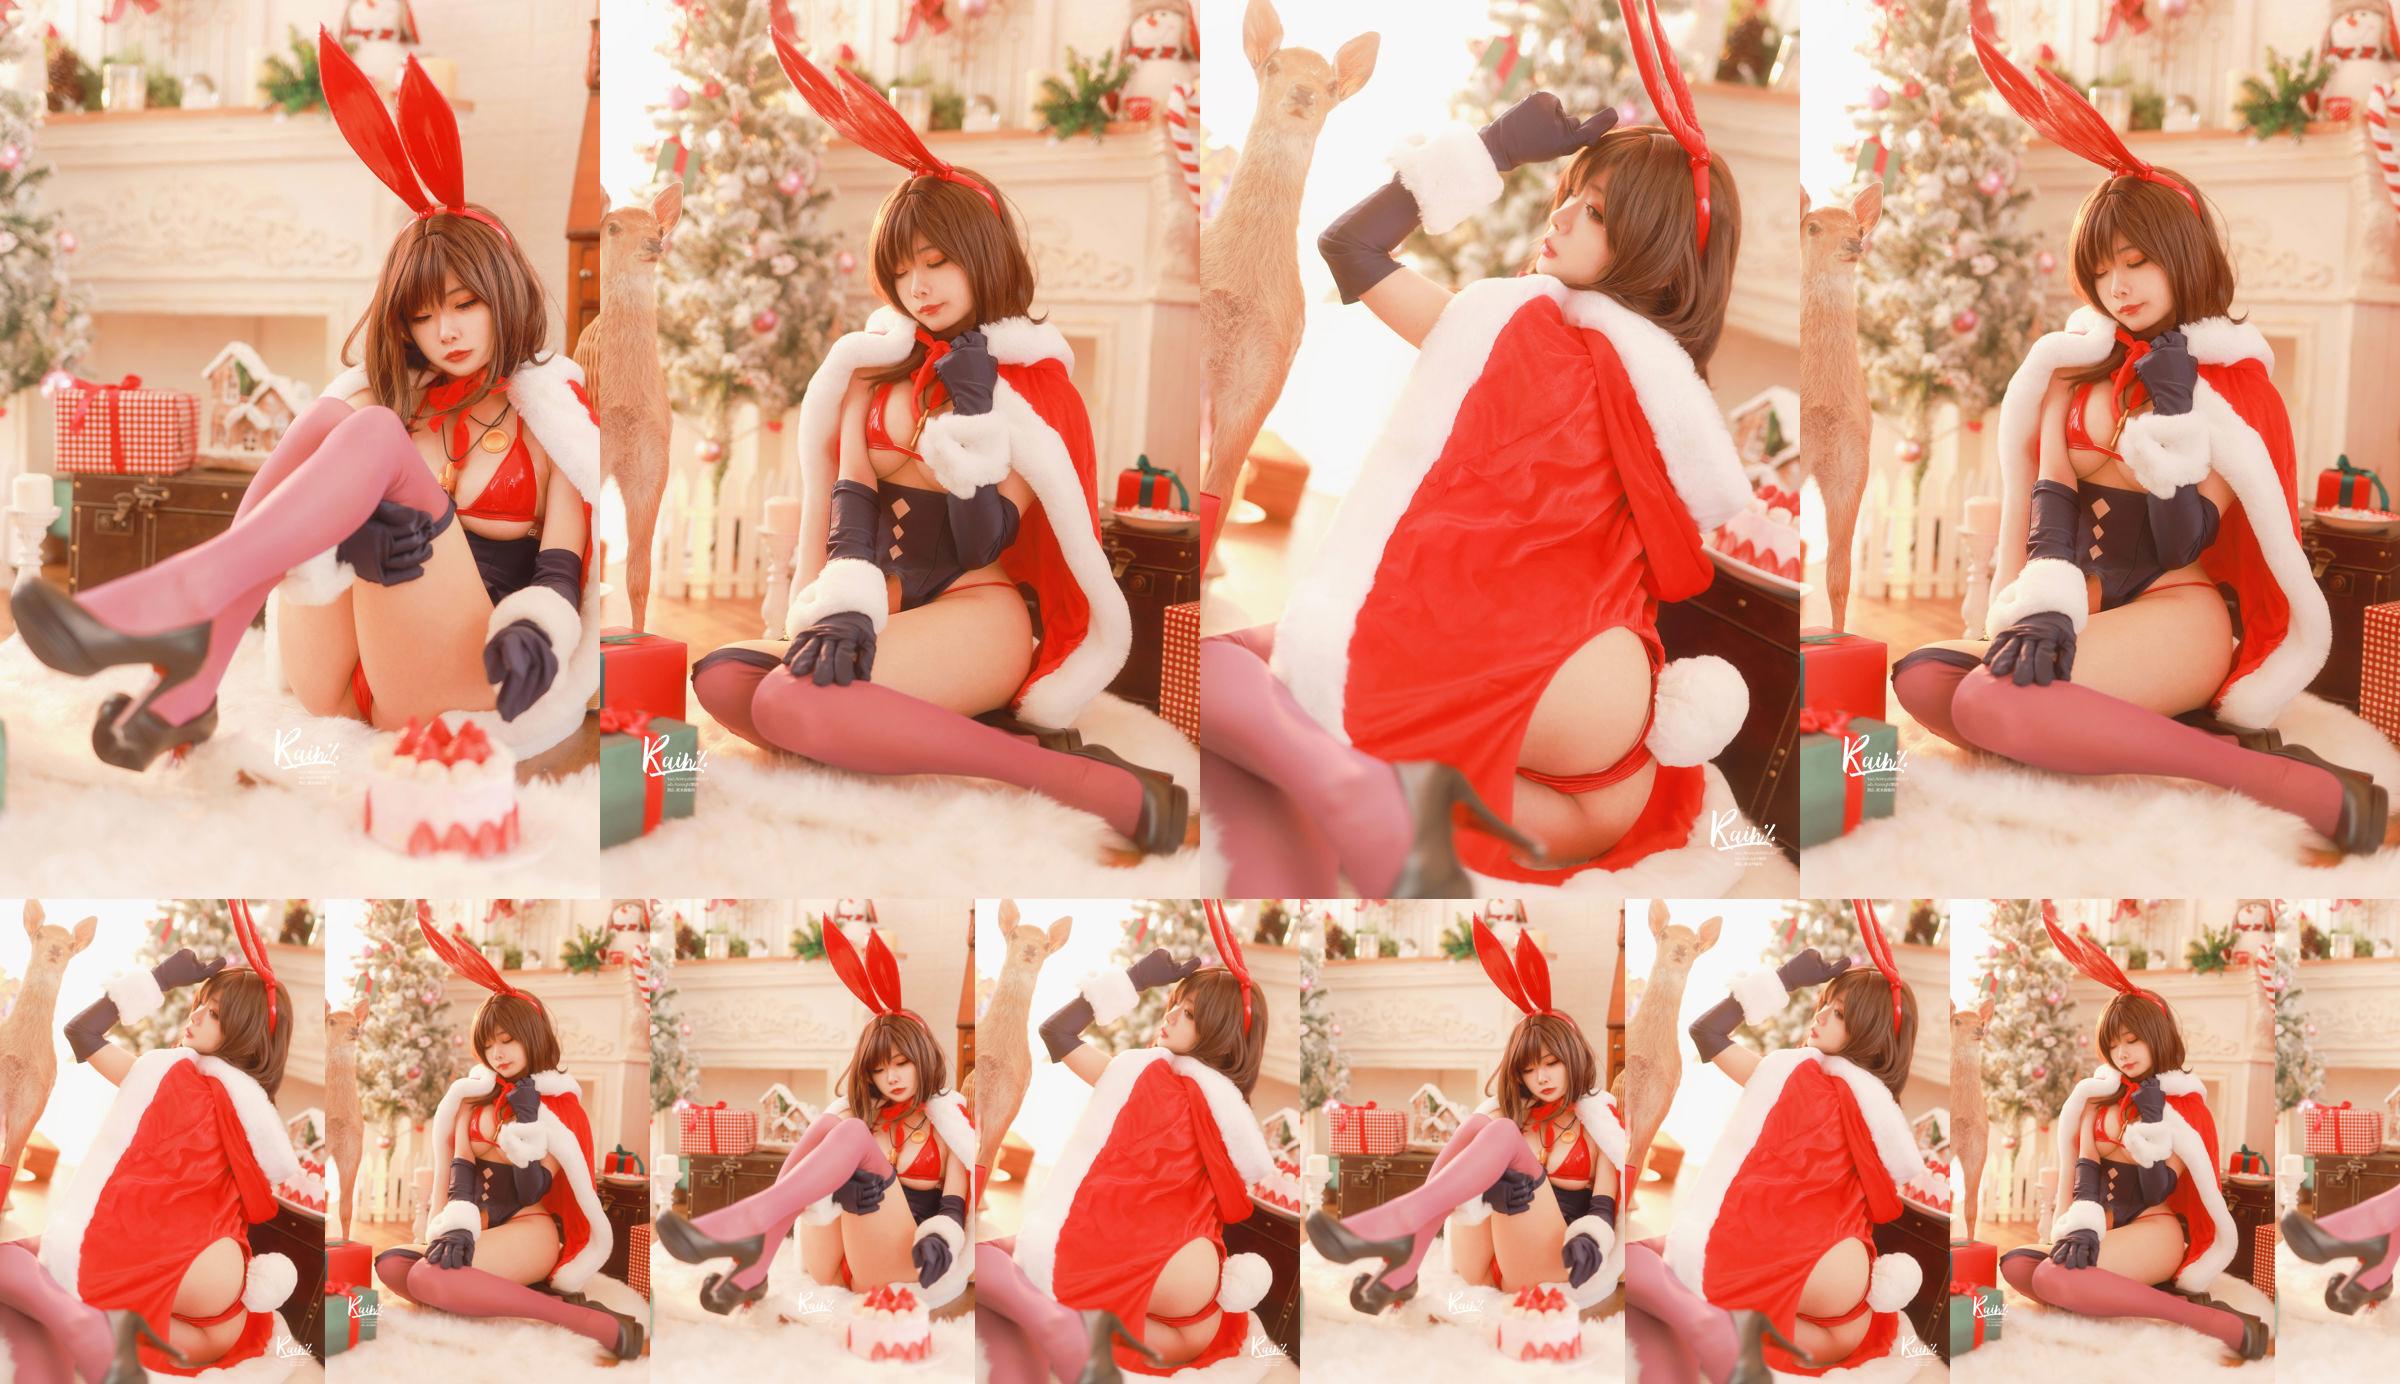 [Net Red COSER Photo] Anime blogueur Rainight 魈雨-Christmas Rabbit No.39a11d Page 1